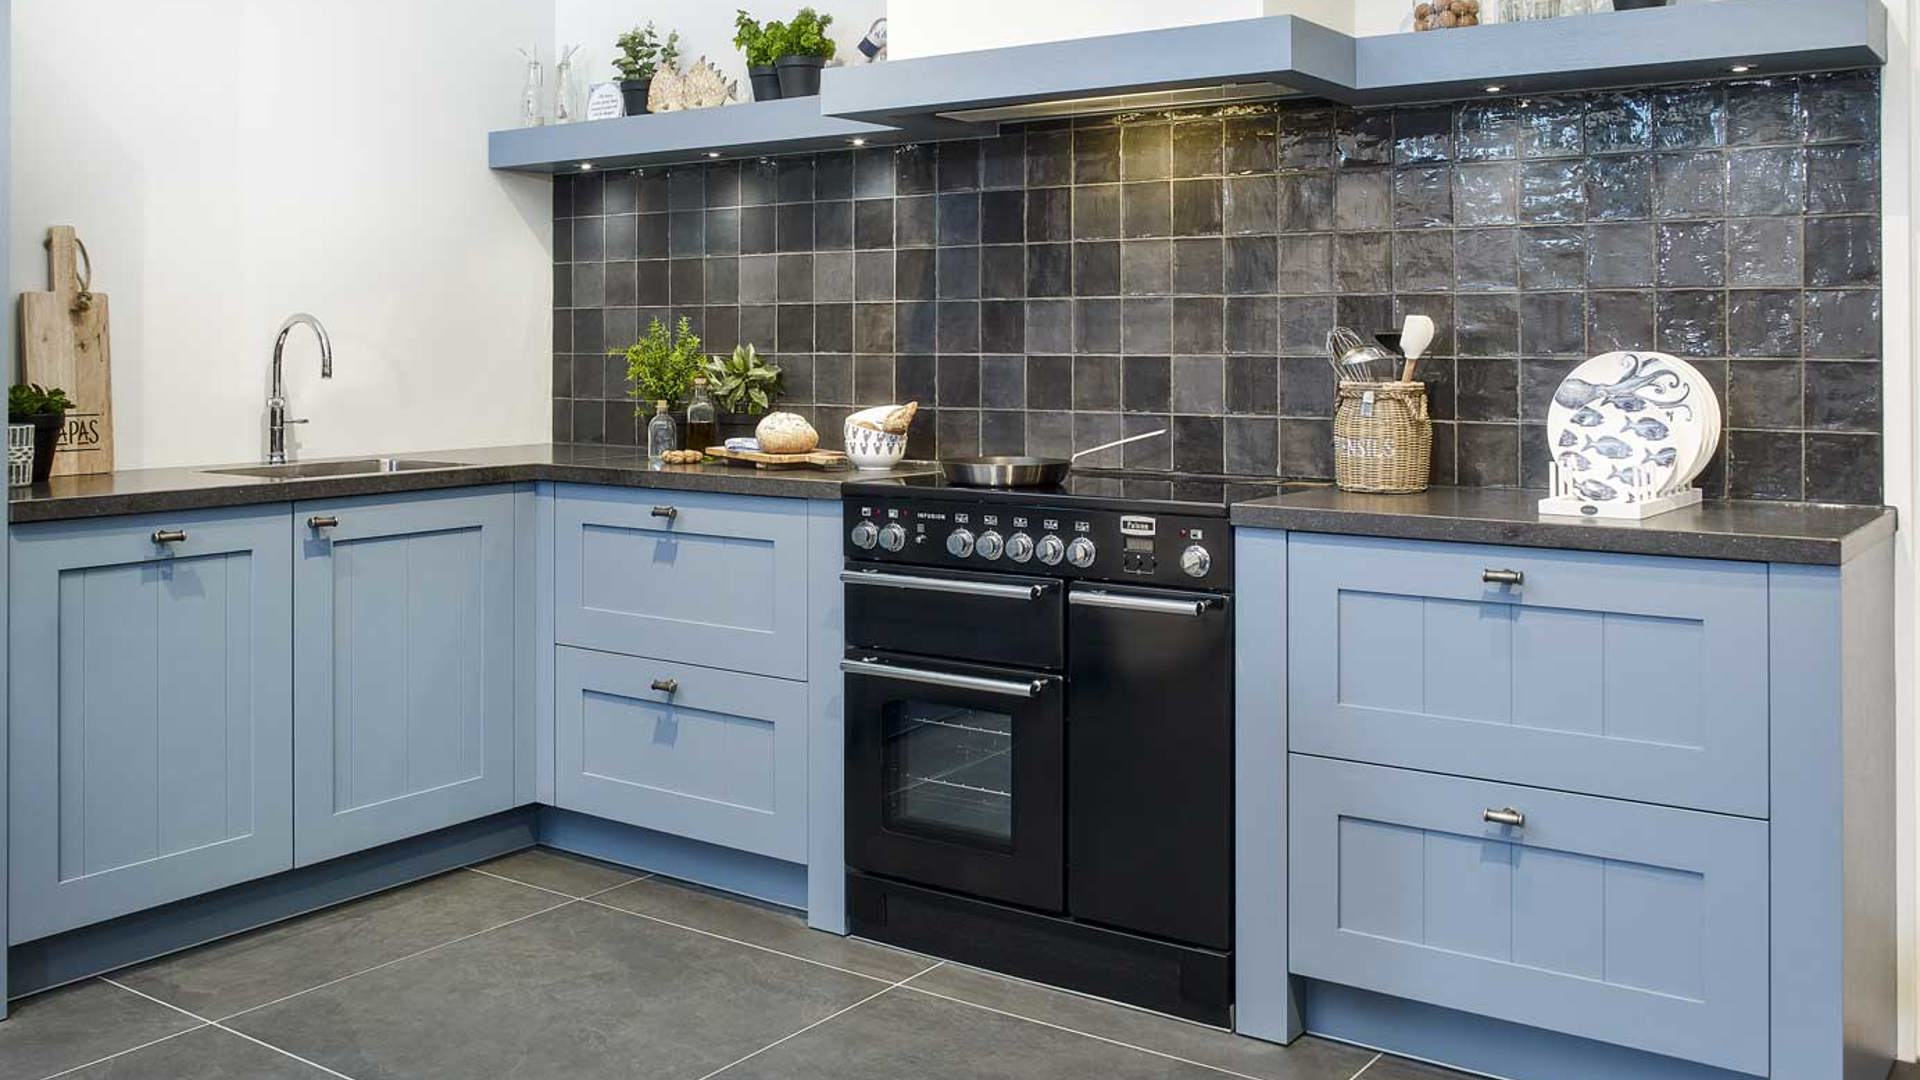 Blauwe keuken hoekopstelling zonder bovenkasten